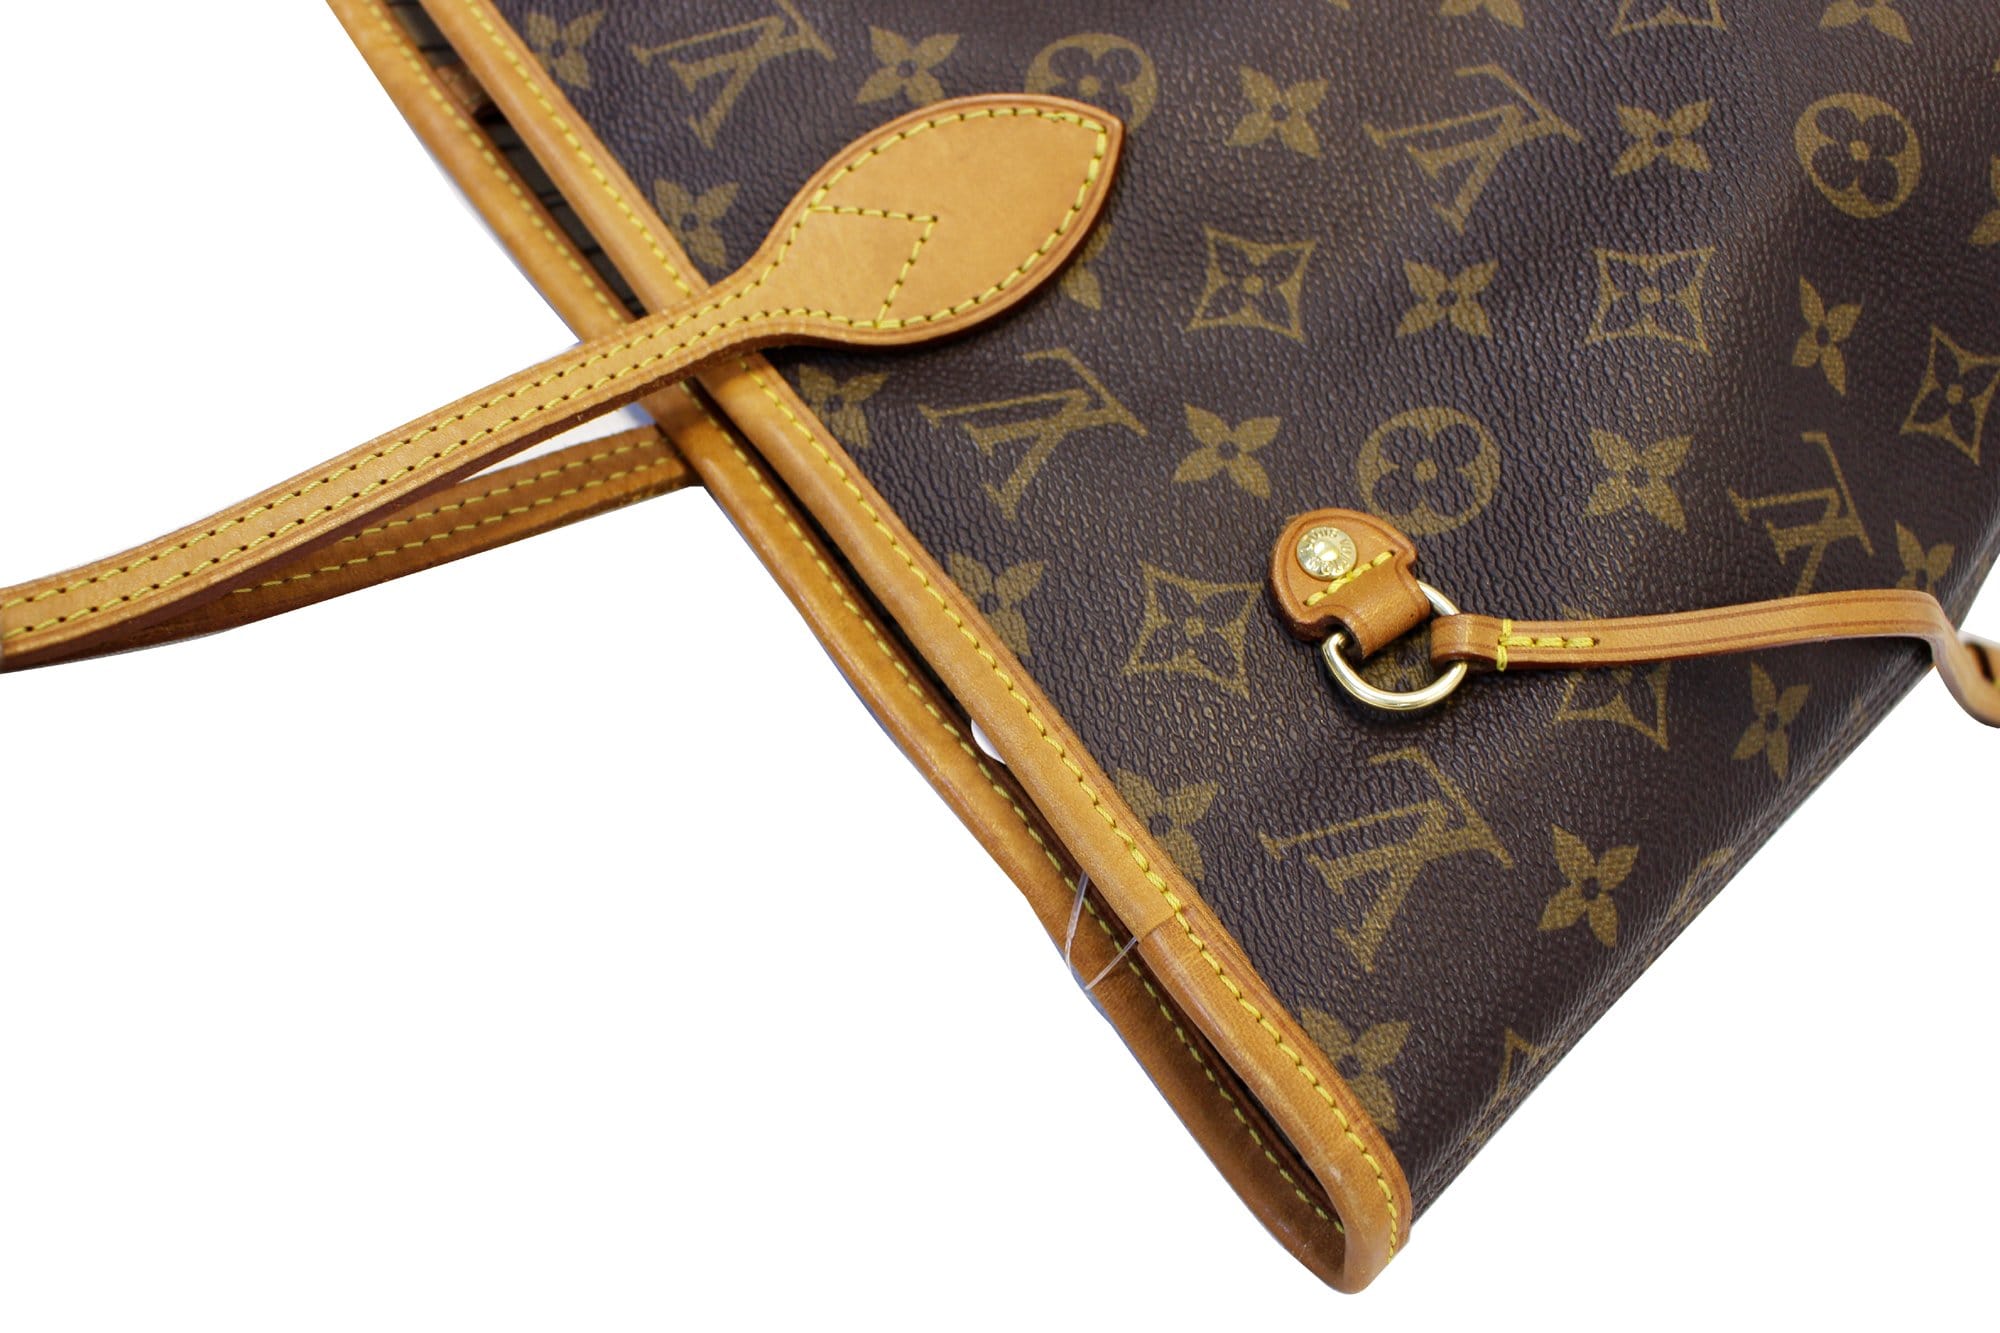 Authentic Louis Vuitton Classic Monogram Neverfull mm Tote Shoulder Bag